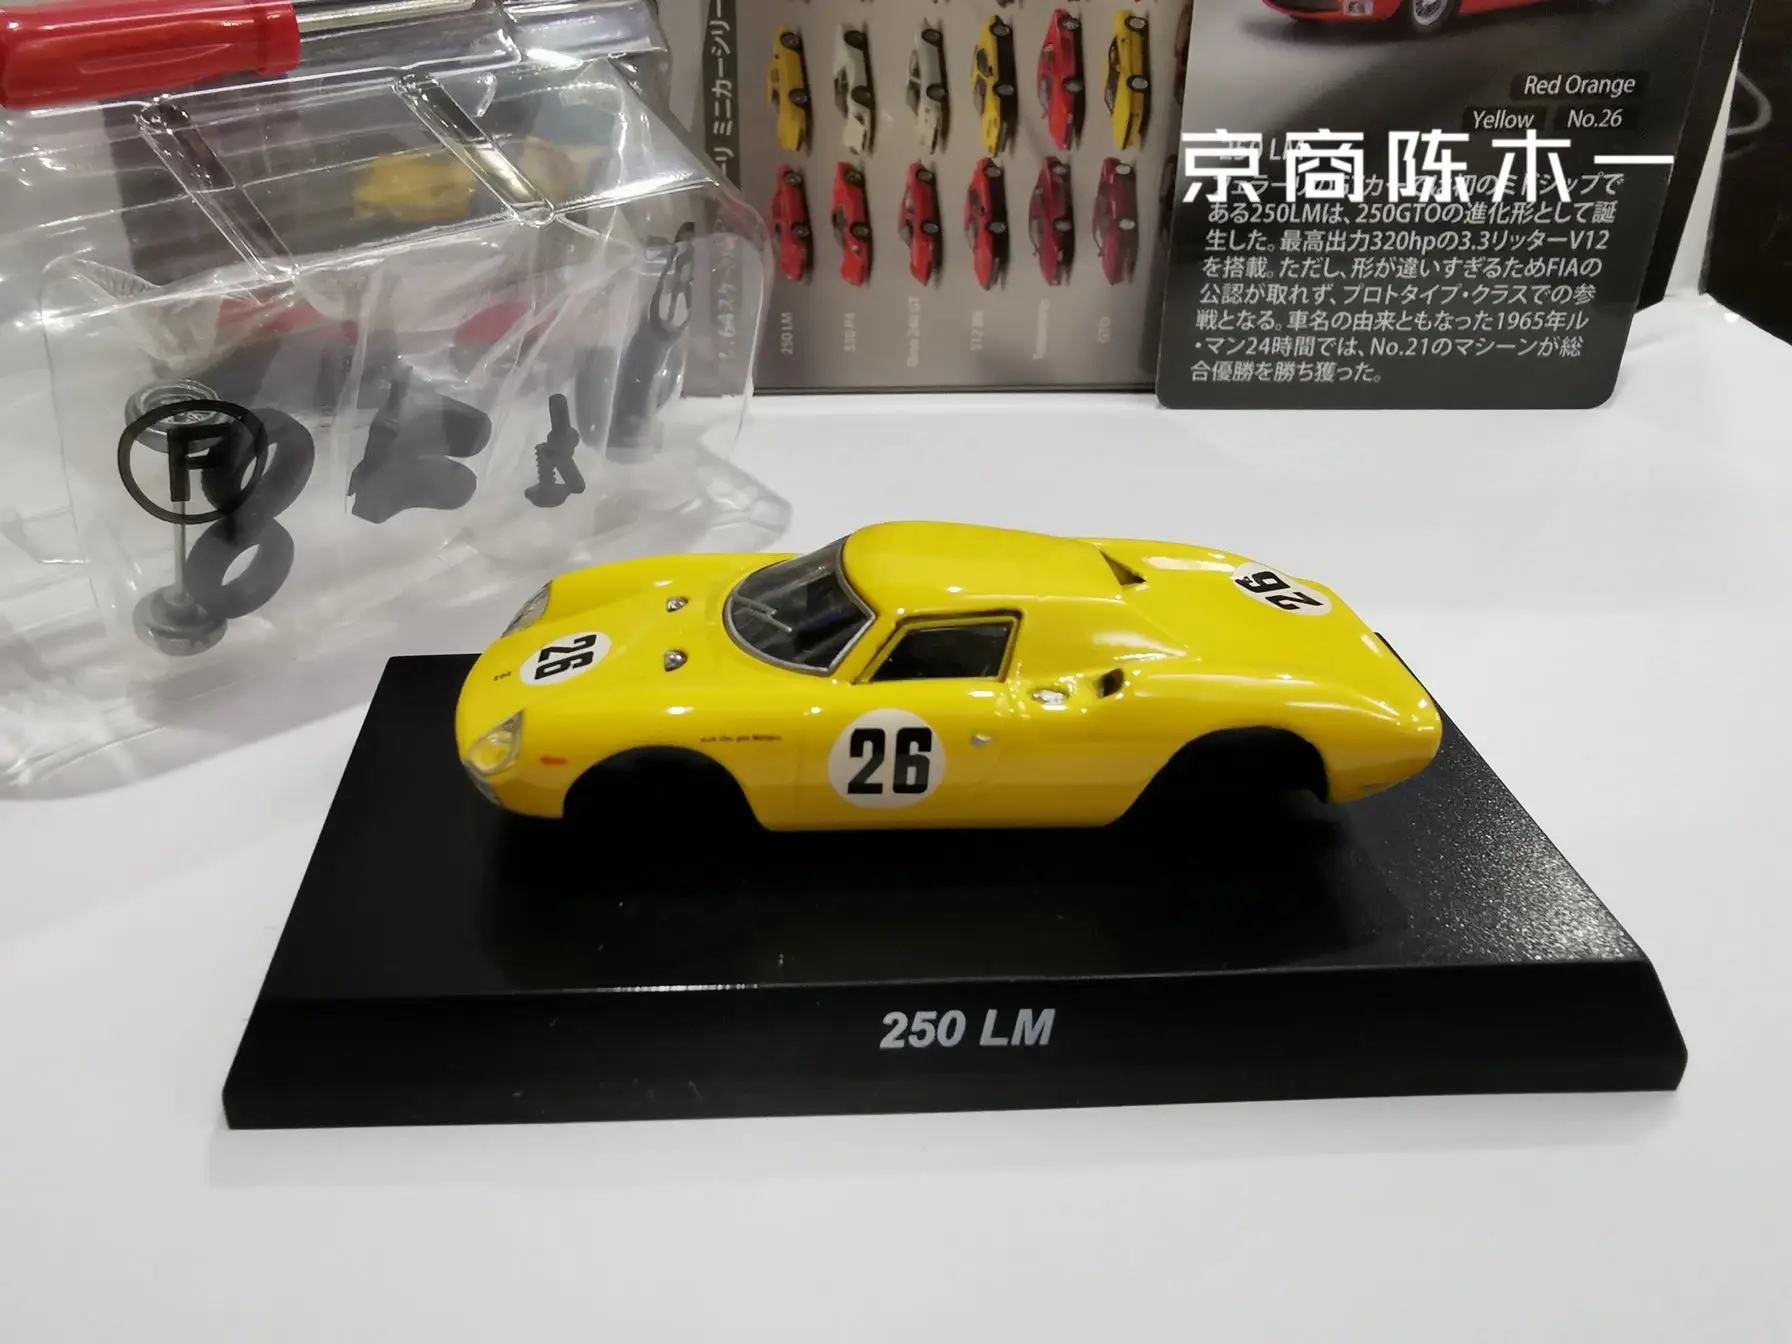 

1/64 KYOSHO Ferrari 250 LM Le mans racing car Collection of die-cast alloy assembled car decoration model toys